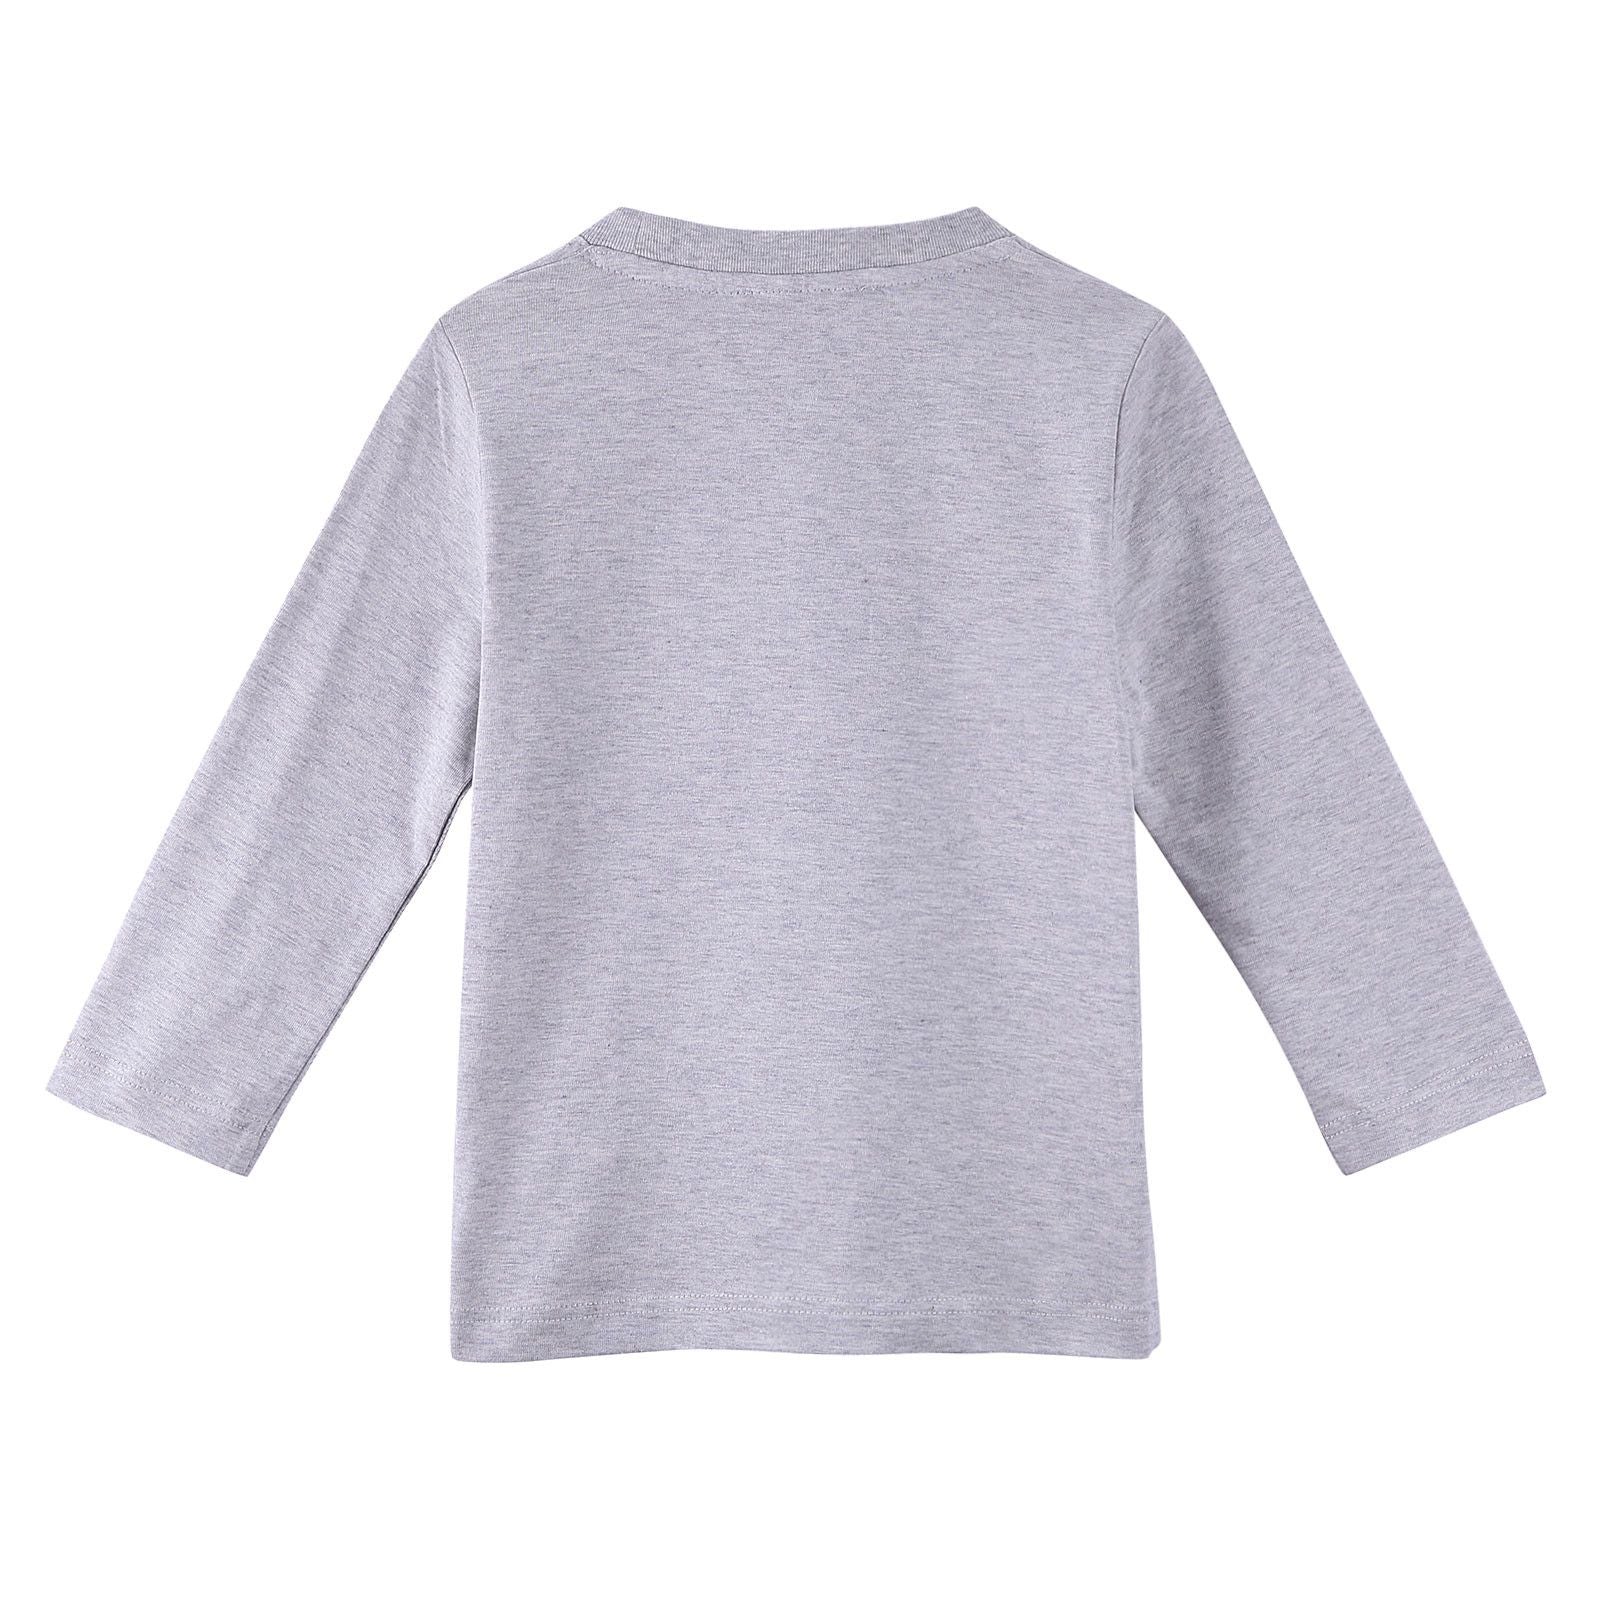 Boys Grey Fancy Illustration Printed Cotton Long Sleeve T-Shirt - CÉMAROSE | Children's Fashion Store - 2